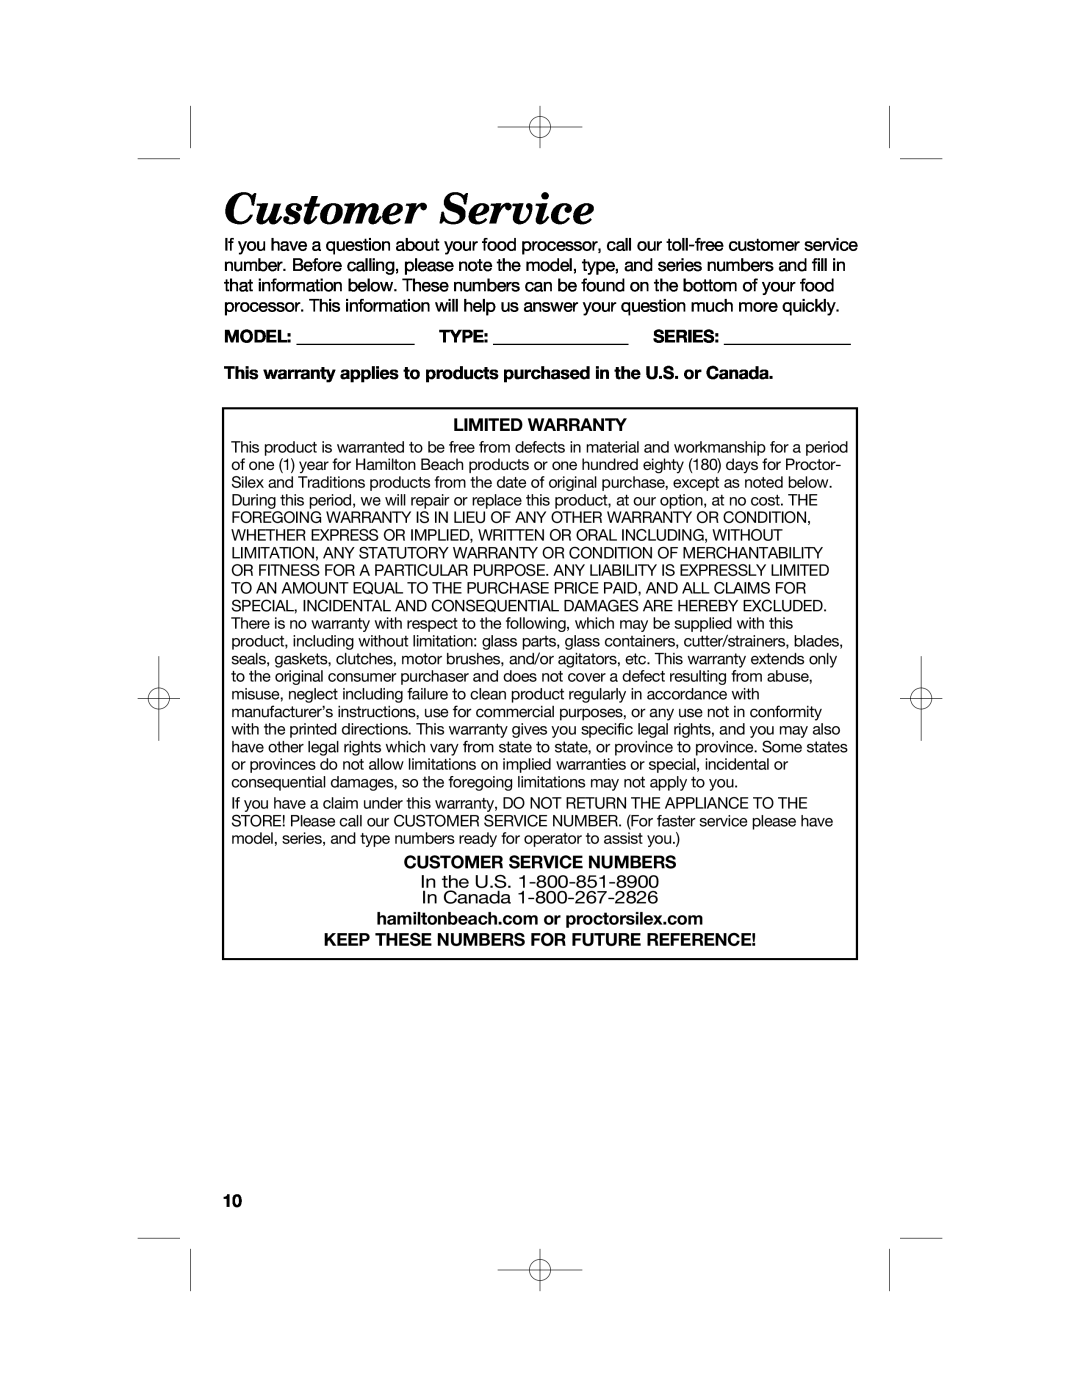 Hamilton Beach 70610, 70670 manual Model Type Series, Limited Warranty, Customer Service Numbers 